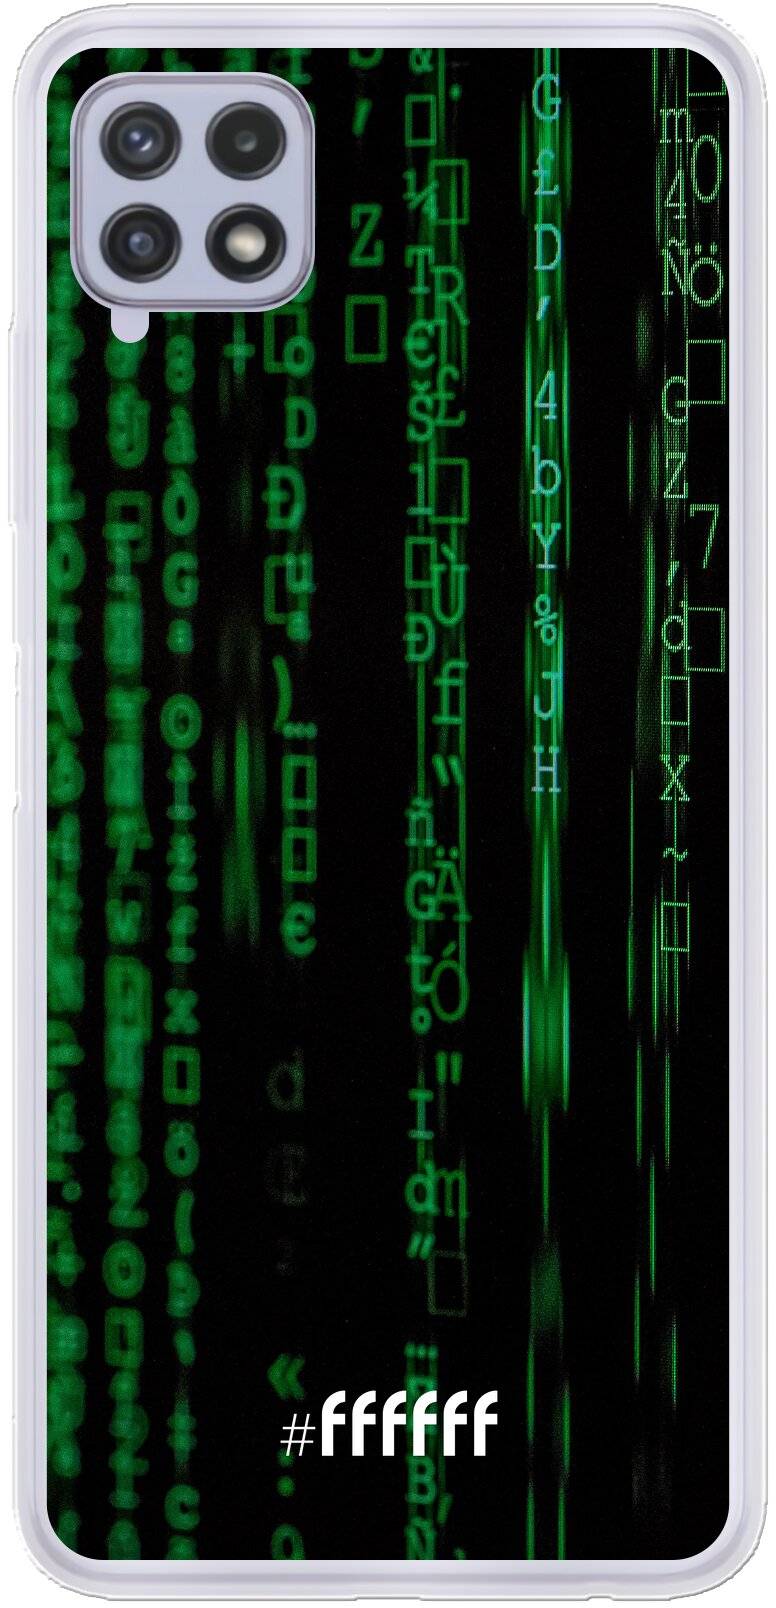 Hacking The Matrix Galaxy A22 4G